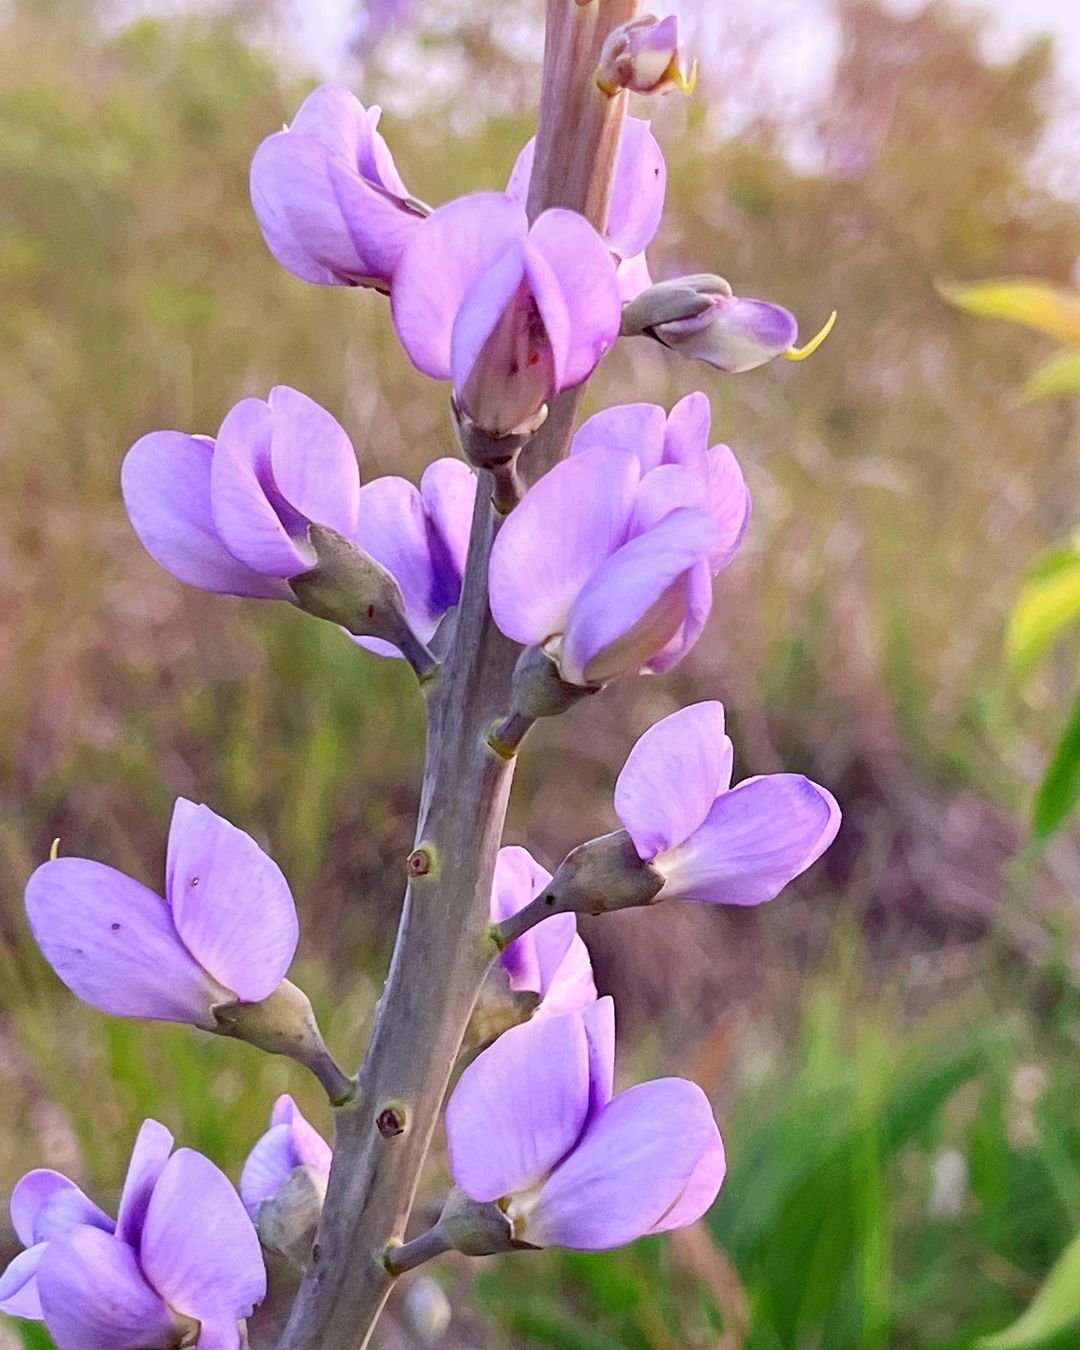 A close up of a purple False Indigo flower in the grass.